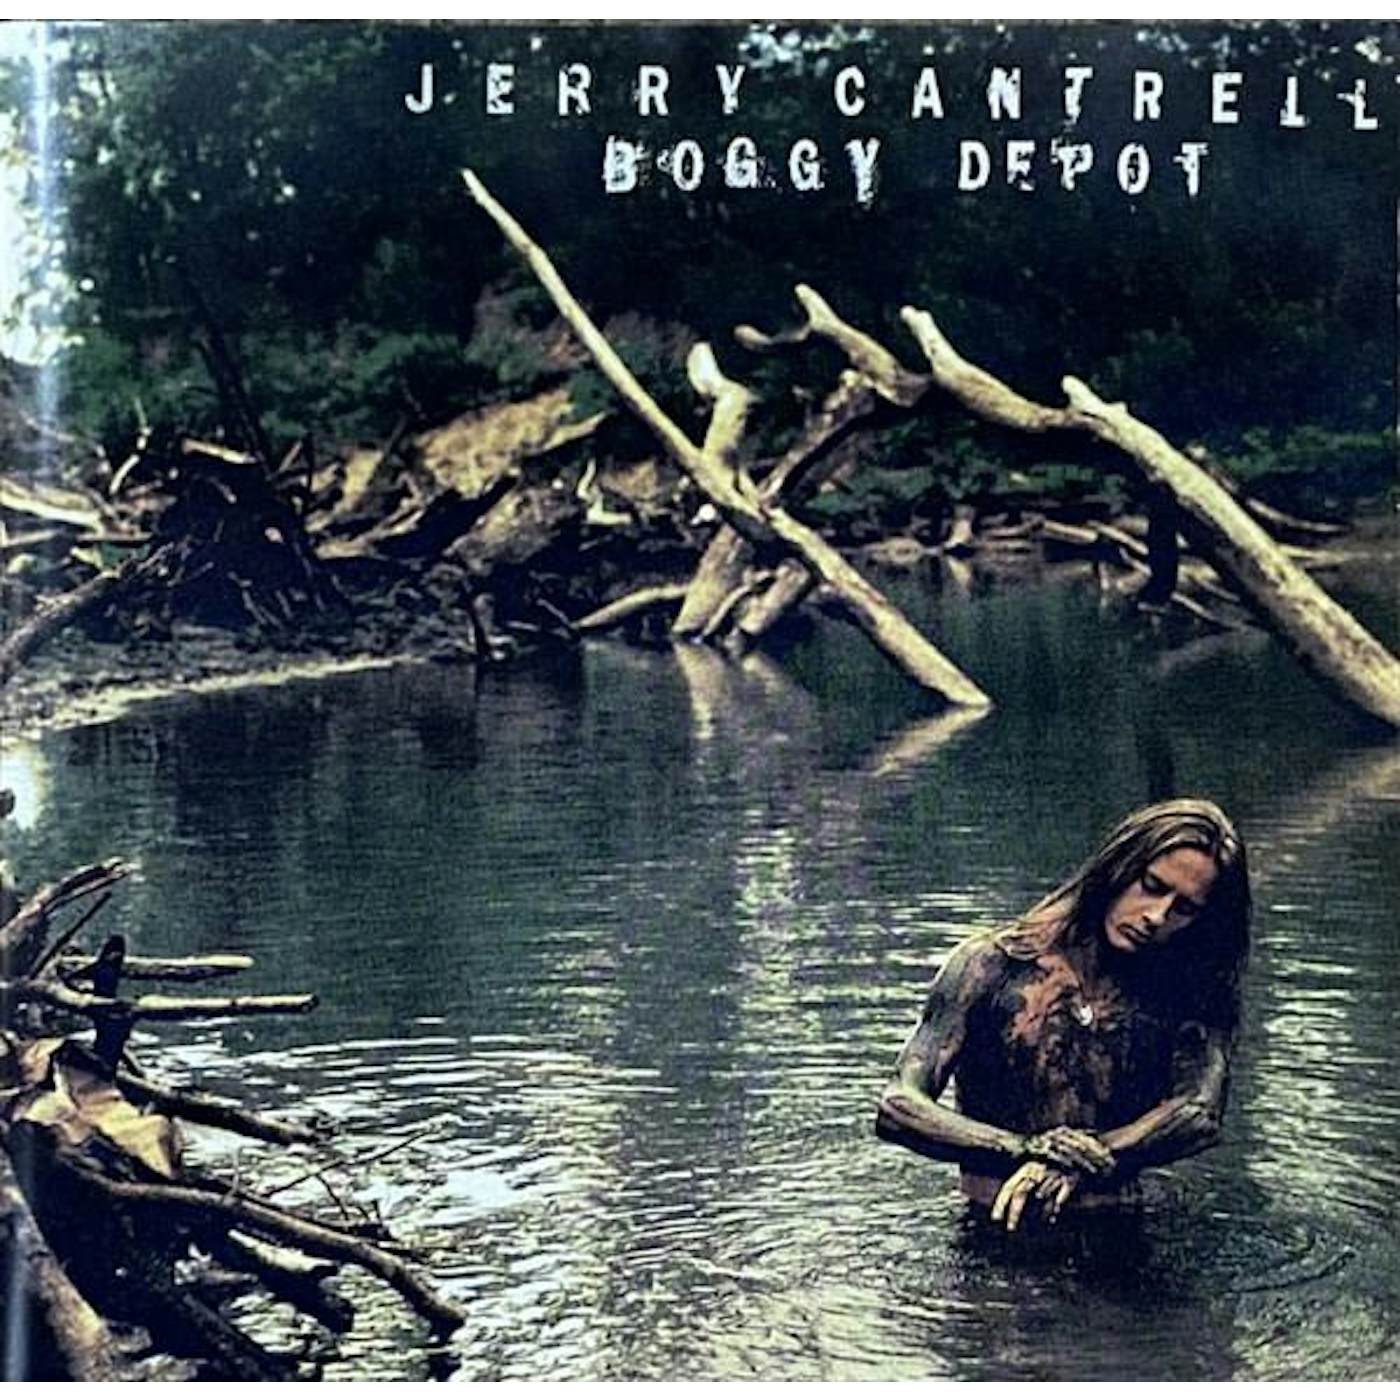 Jerry Cantrell BOGGY DEPOT (24BIT REMASTER) CD